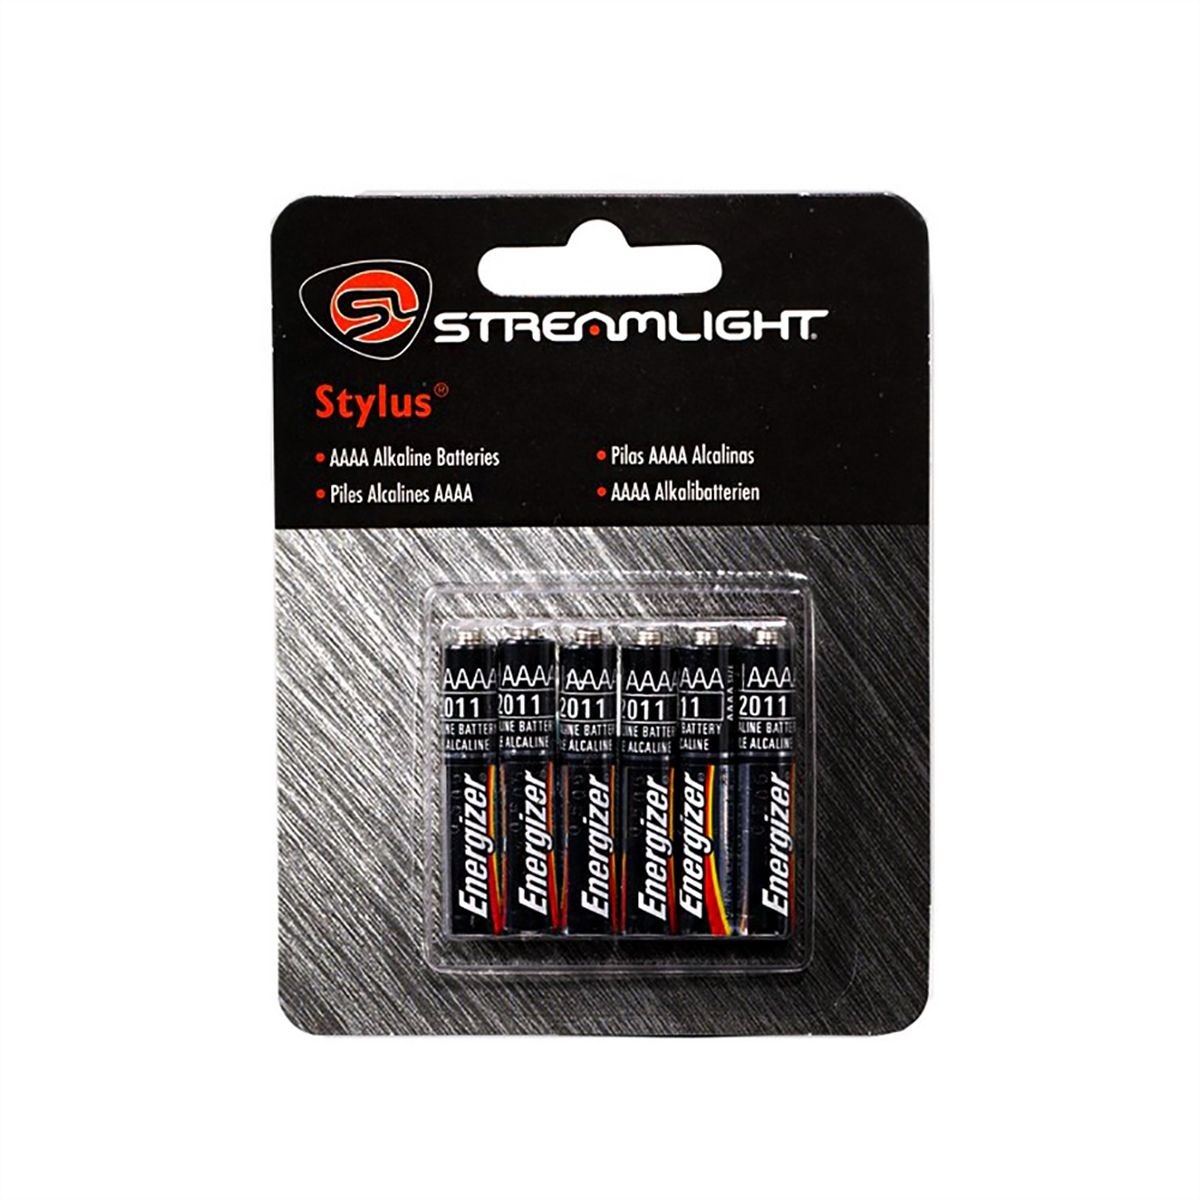 Seis pilas alcalinas AAAA Energizer para luces Stylus Streamlight